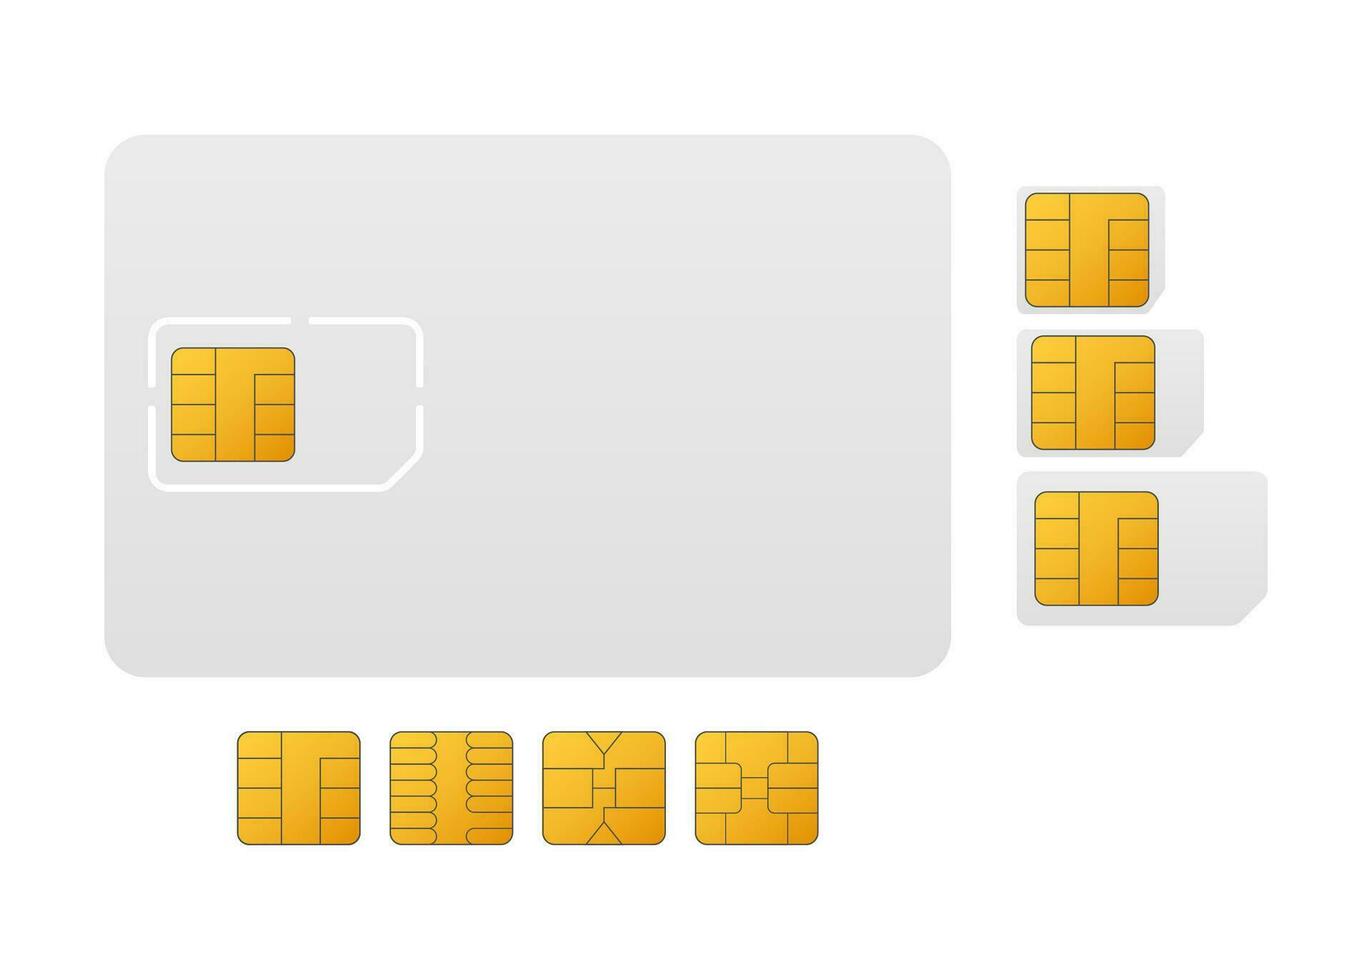 móvil celular teléfono sim tarjeta chip aislado en antecedentes. vector valores ilustración